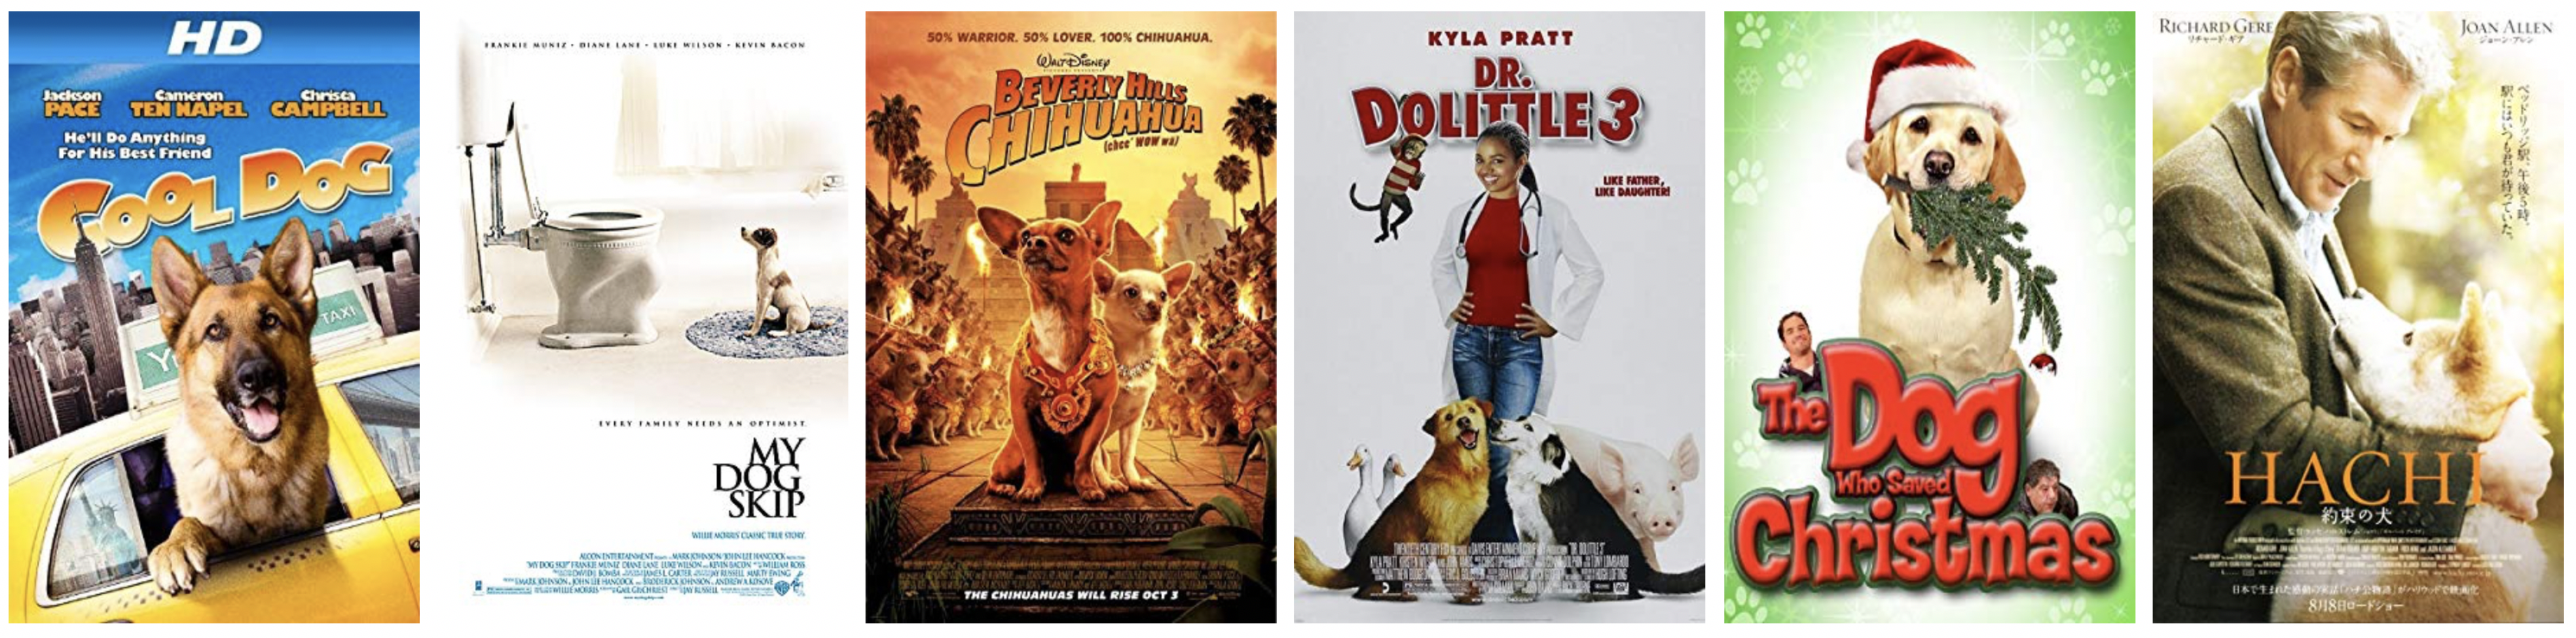 dog focused movie posters